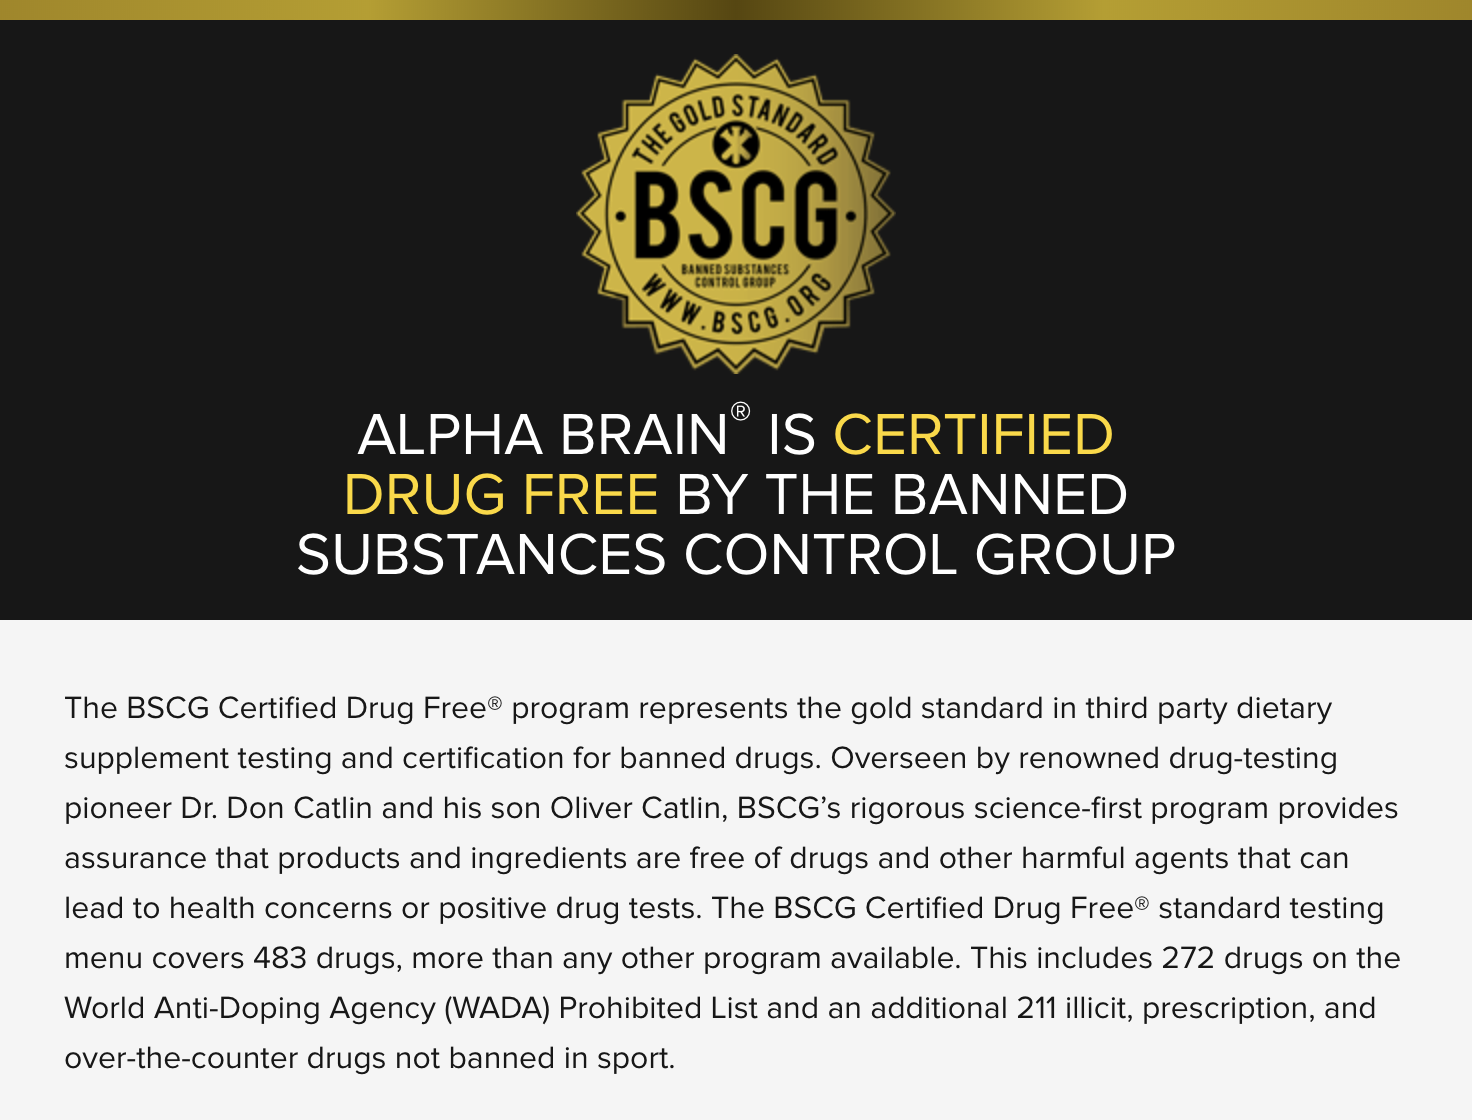 Onit BSCG Certified Drug Free seal